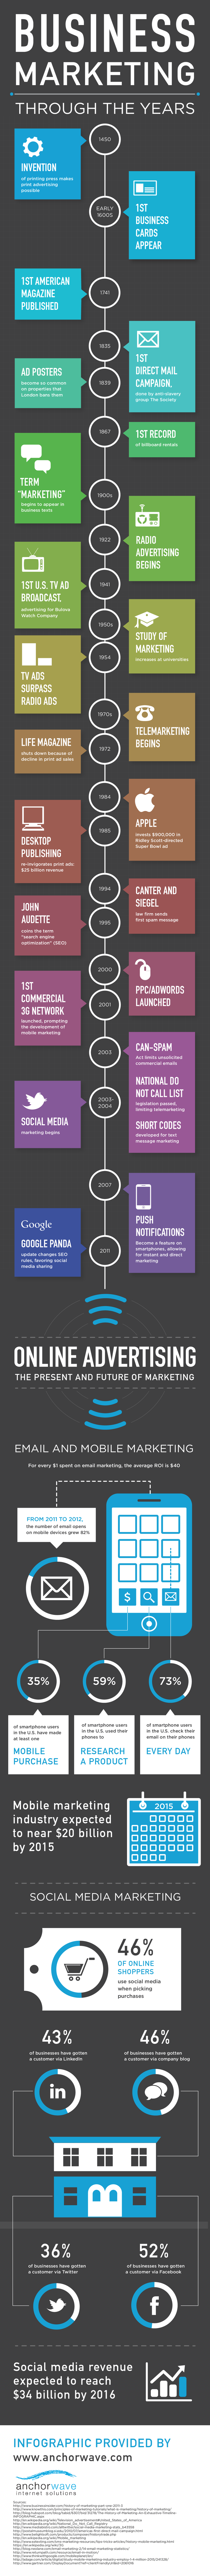 La historia del marketing #Infografía #Internet #Marketing